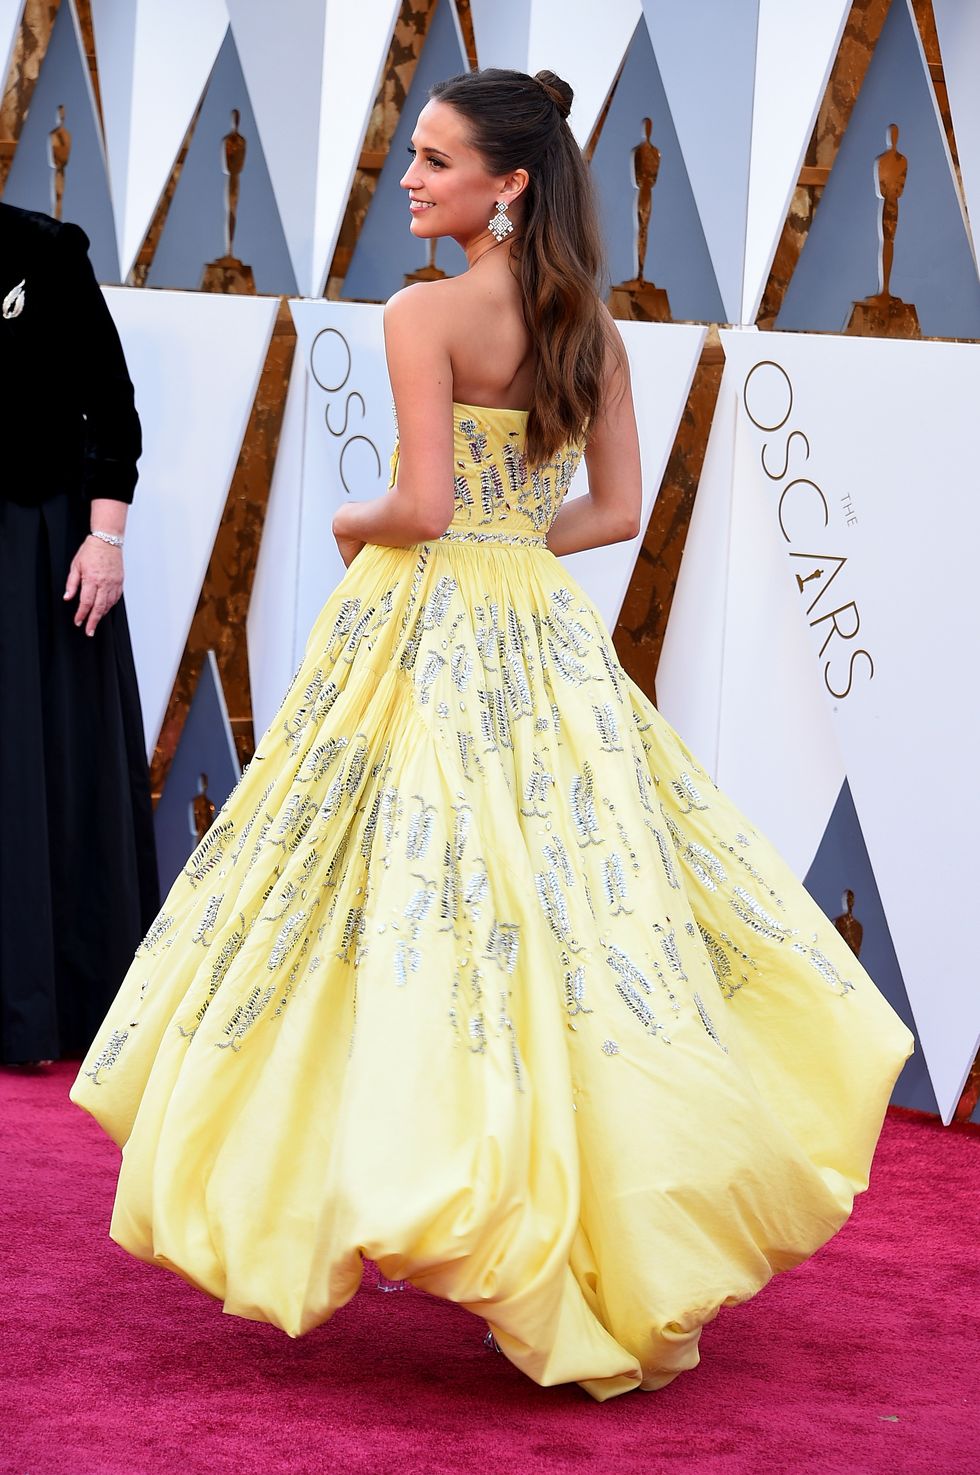 Alicia Vikander Shows Off Her Louis Vuitton Gown at Oscars 2016!: Photo  3591776, 2016 Oscars, Alicia Vikander, Oscars Photos